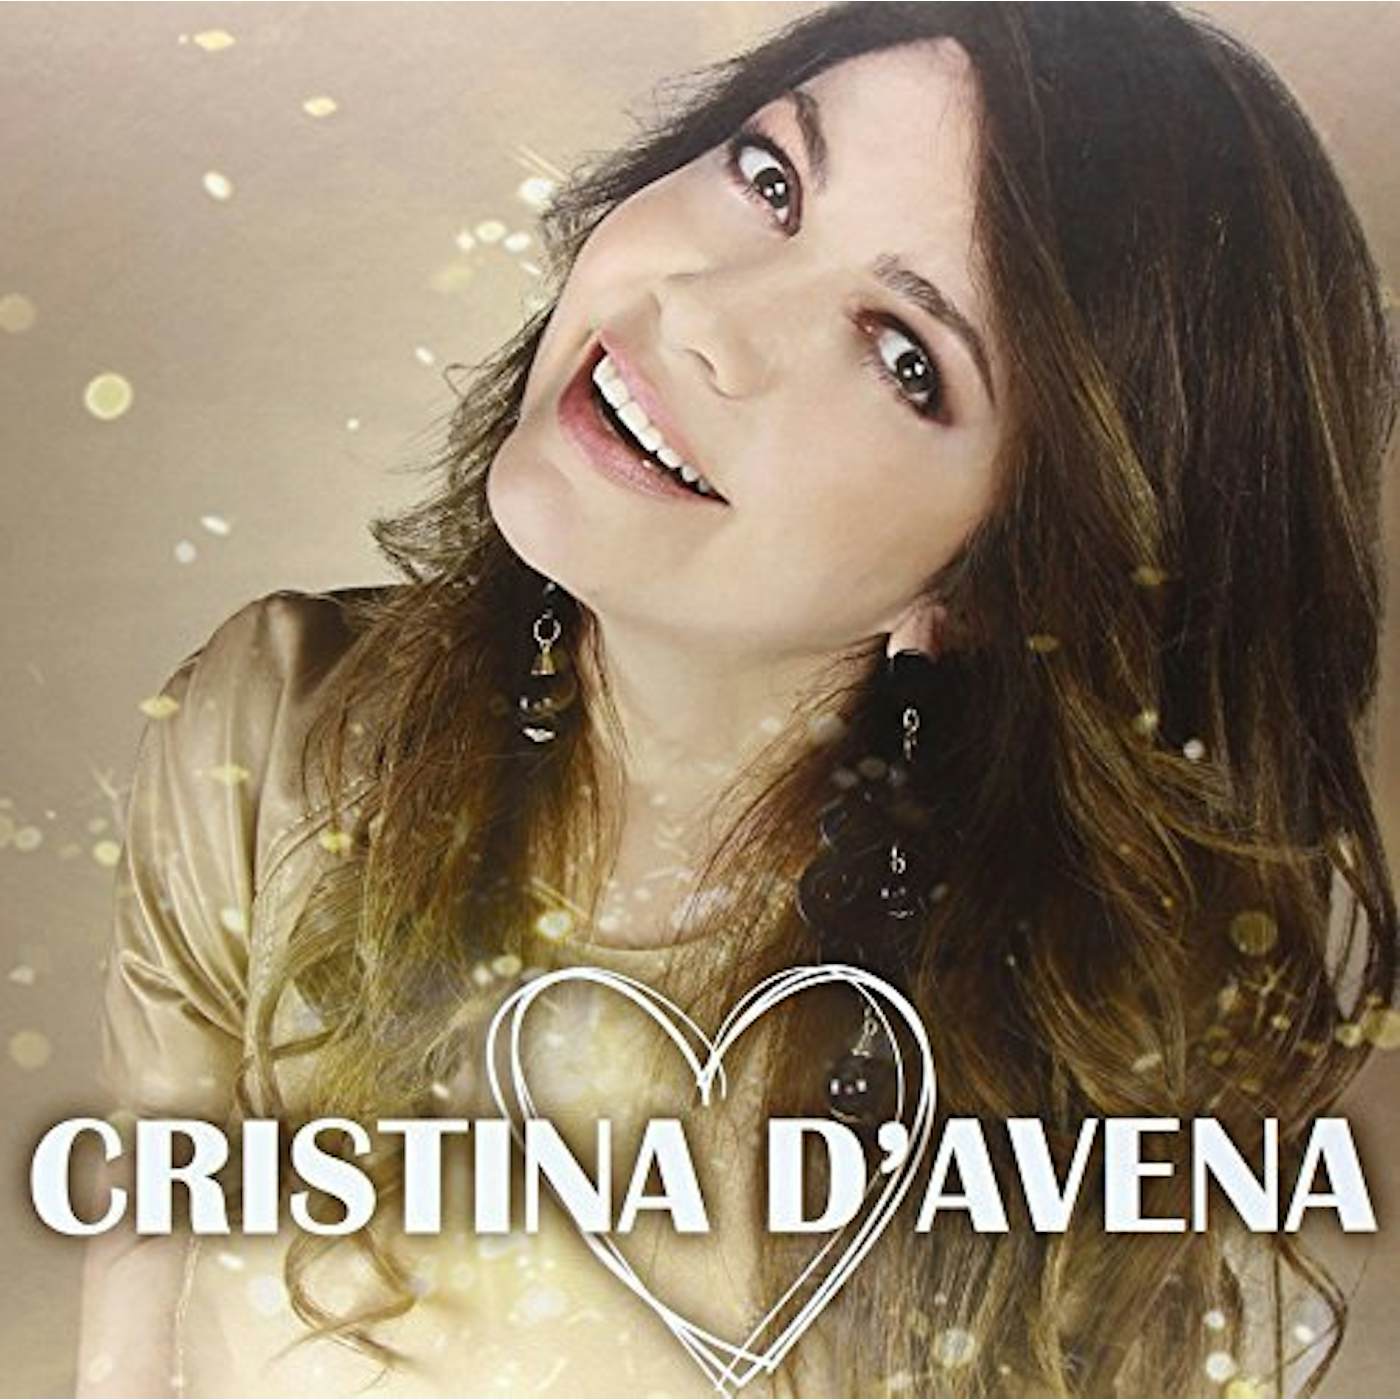 CRISTINA D'AVENA PICTURE DISC Vinyl Record